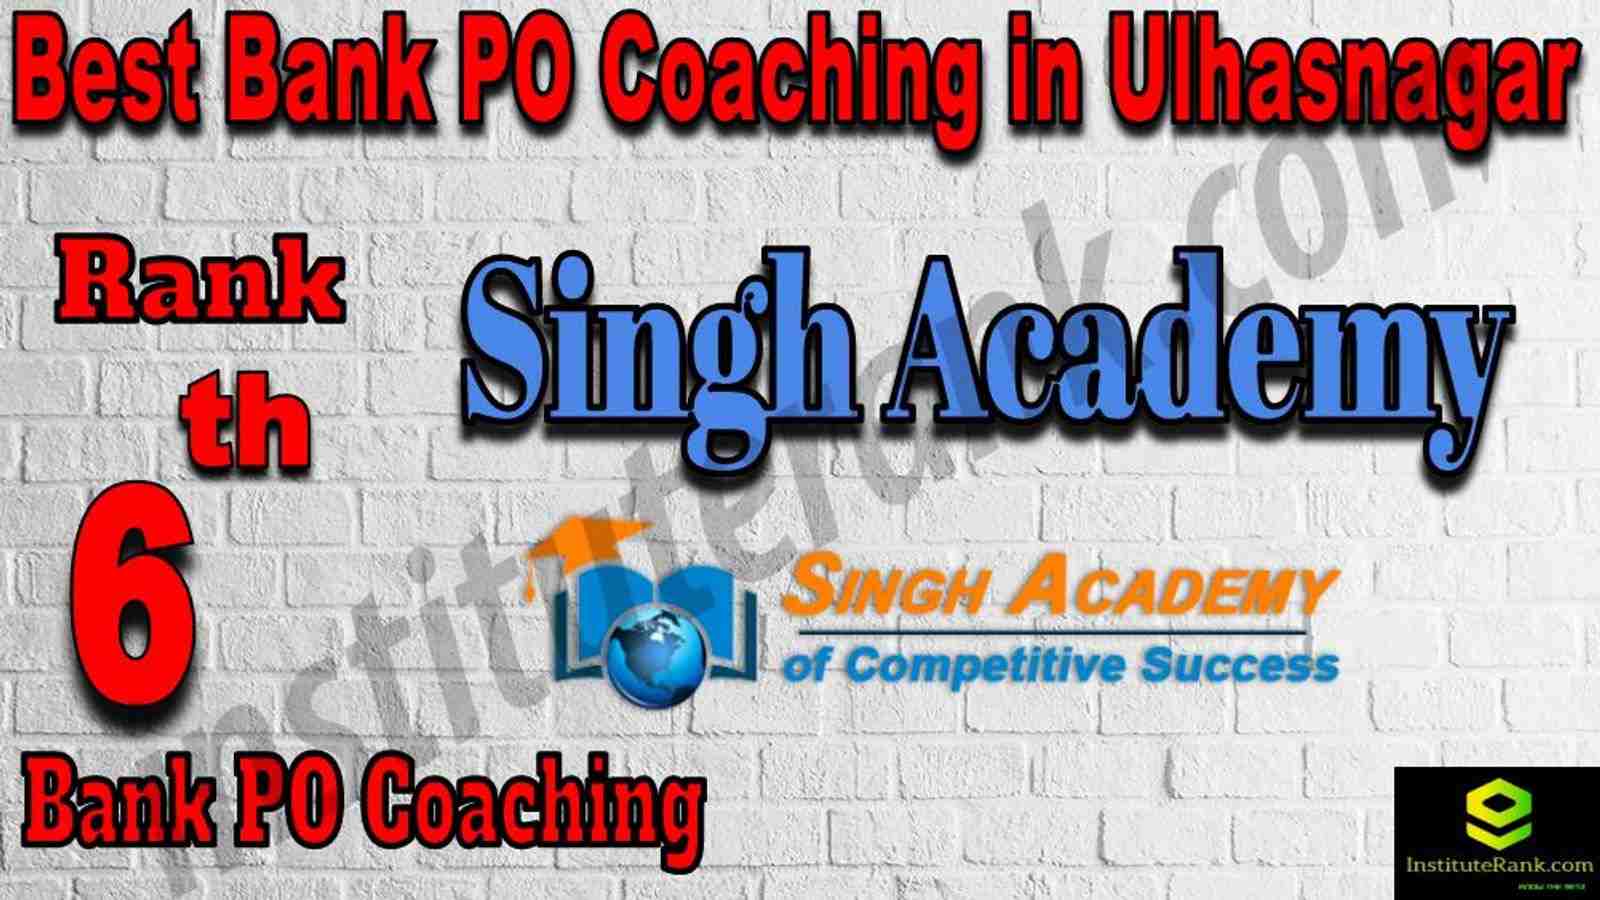 6th Best Bank PO Coaching in Ulhasnagar